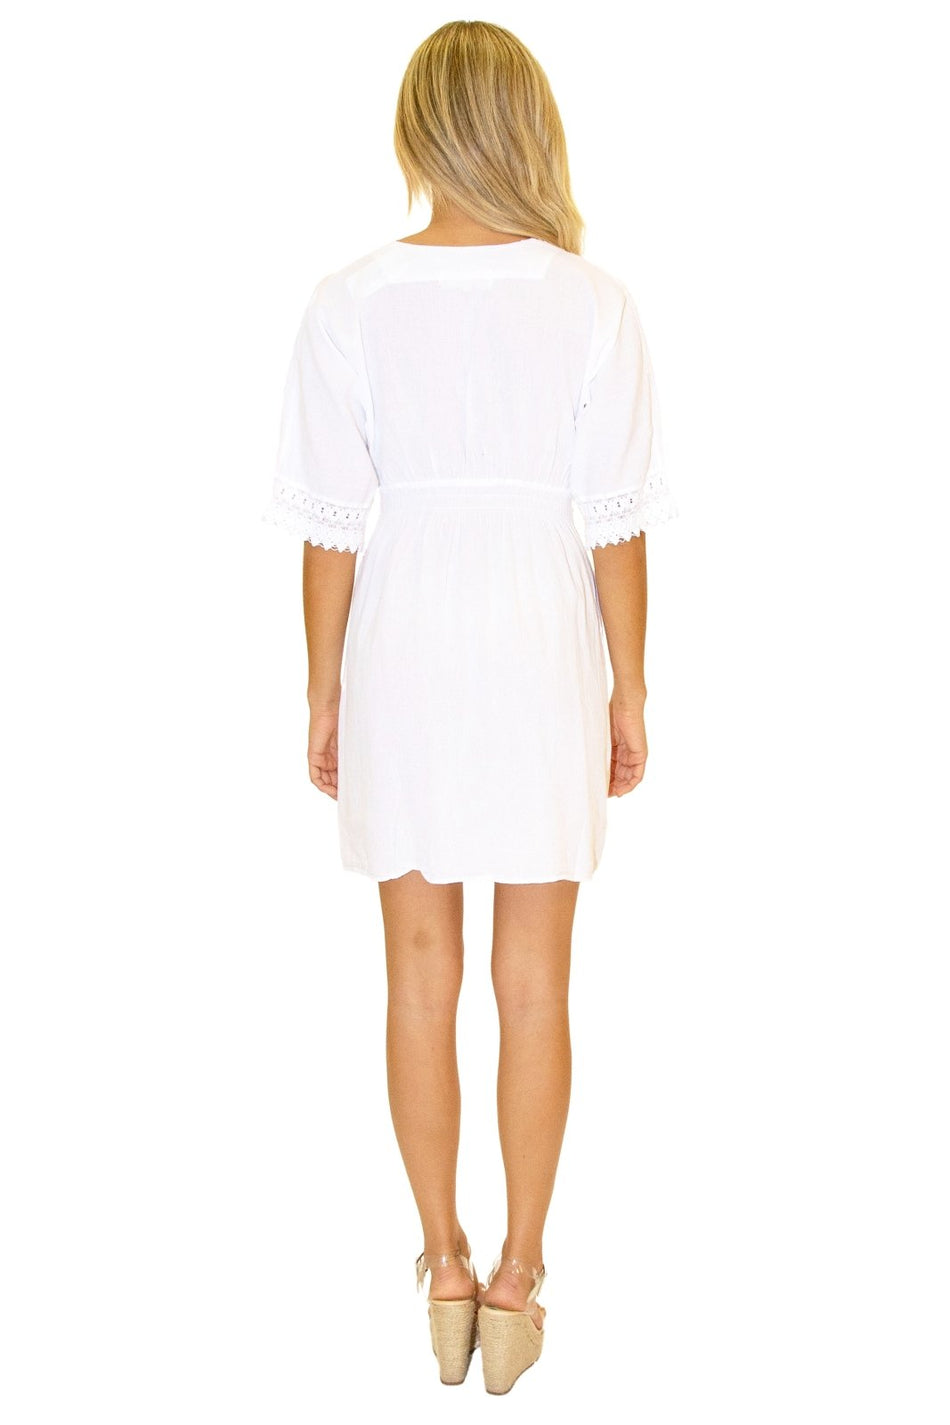 100% Cotton 'Hazel' Belted Dress White